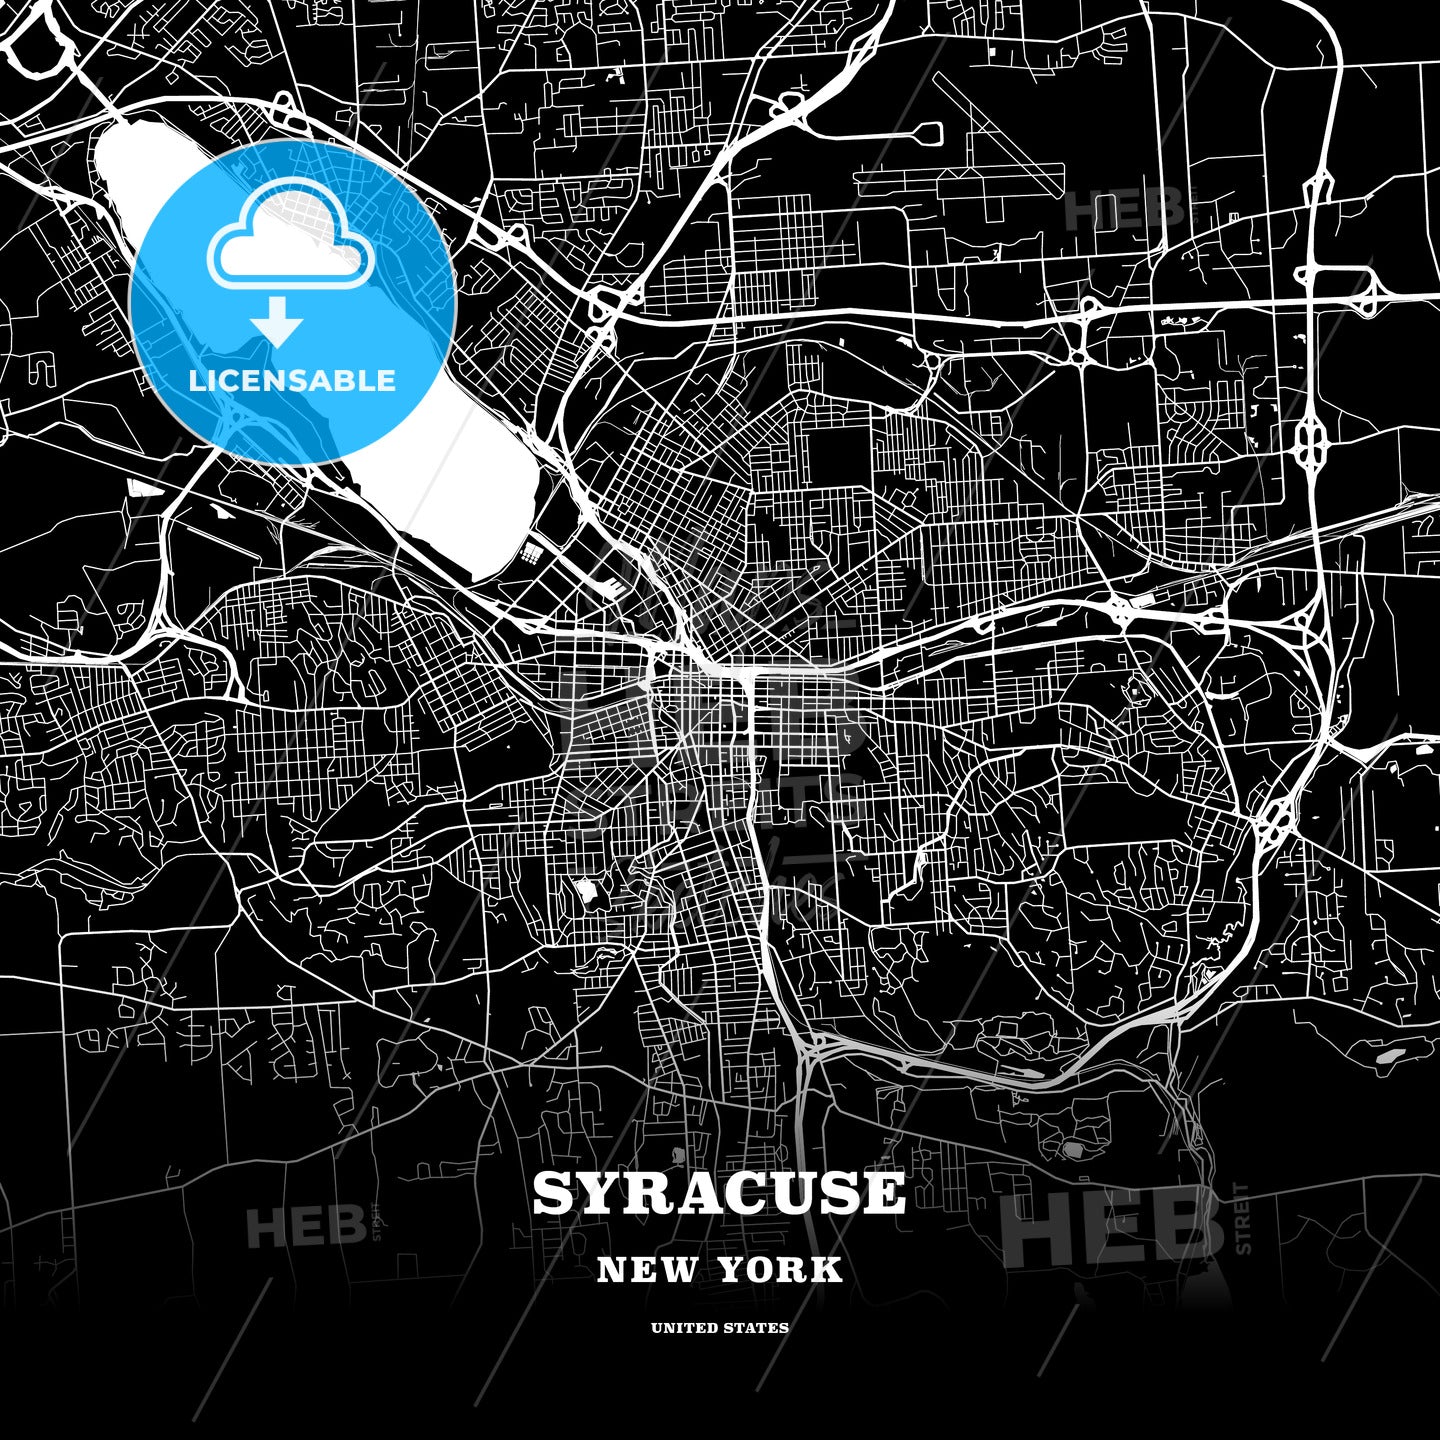 Syracuse, New York, USA map